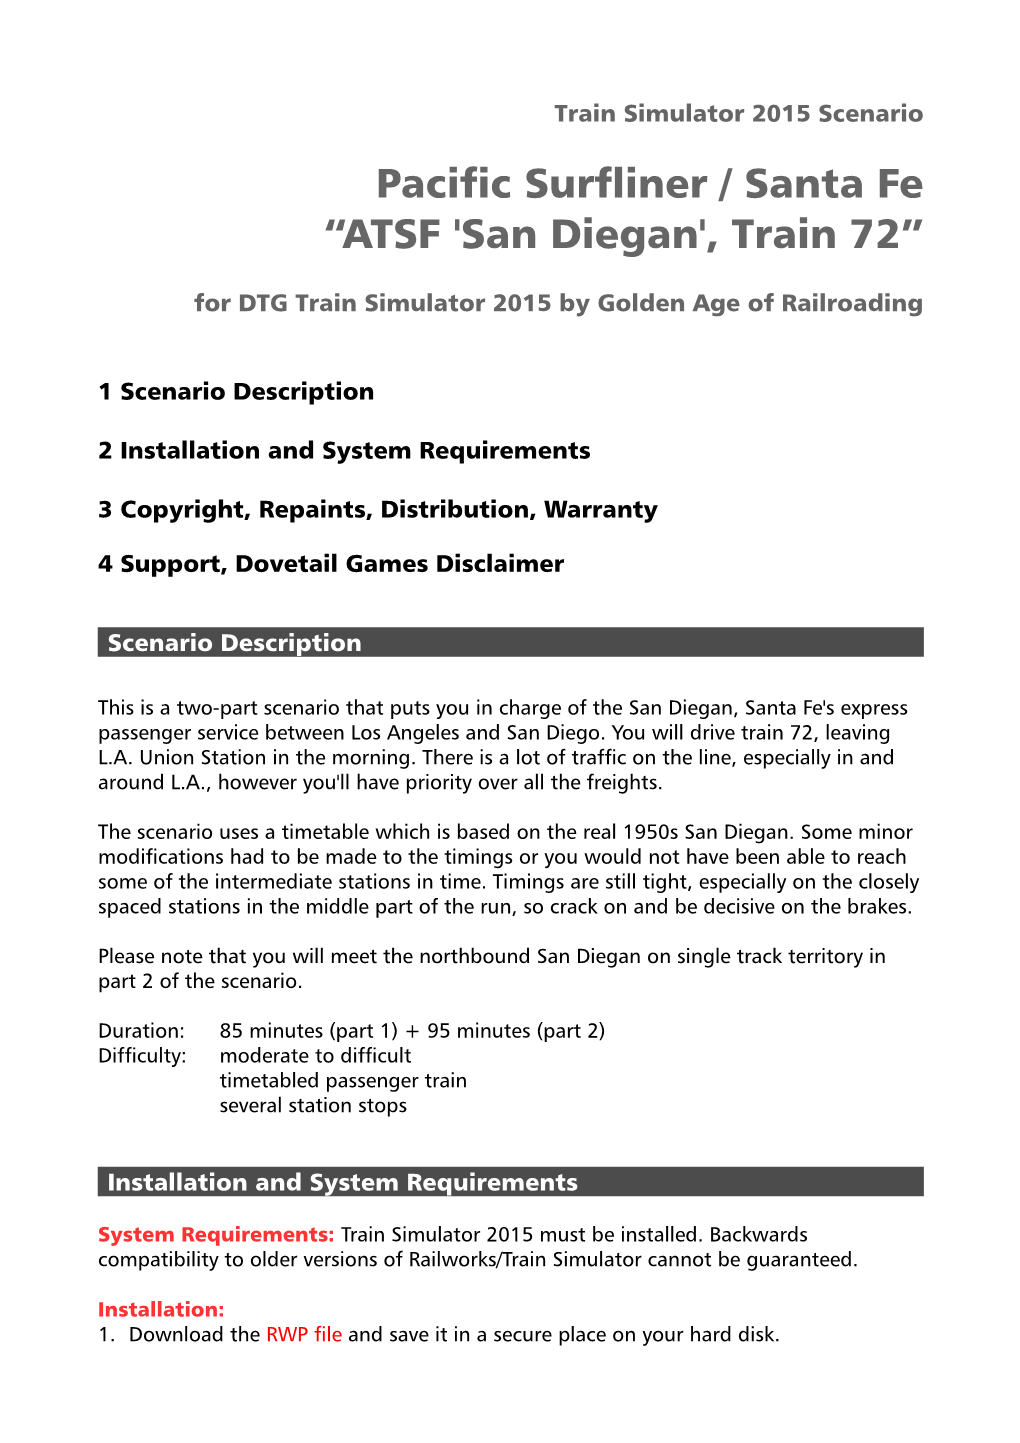 Pacific Surfliner / Santa Fe “ATSF 'San Diegan', Train 72”